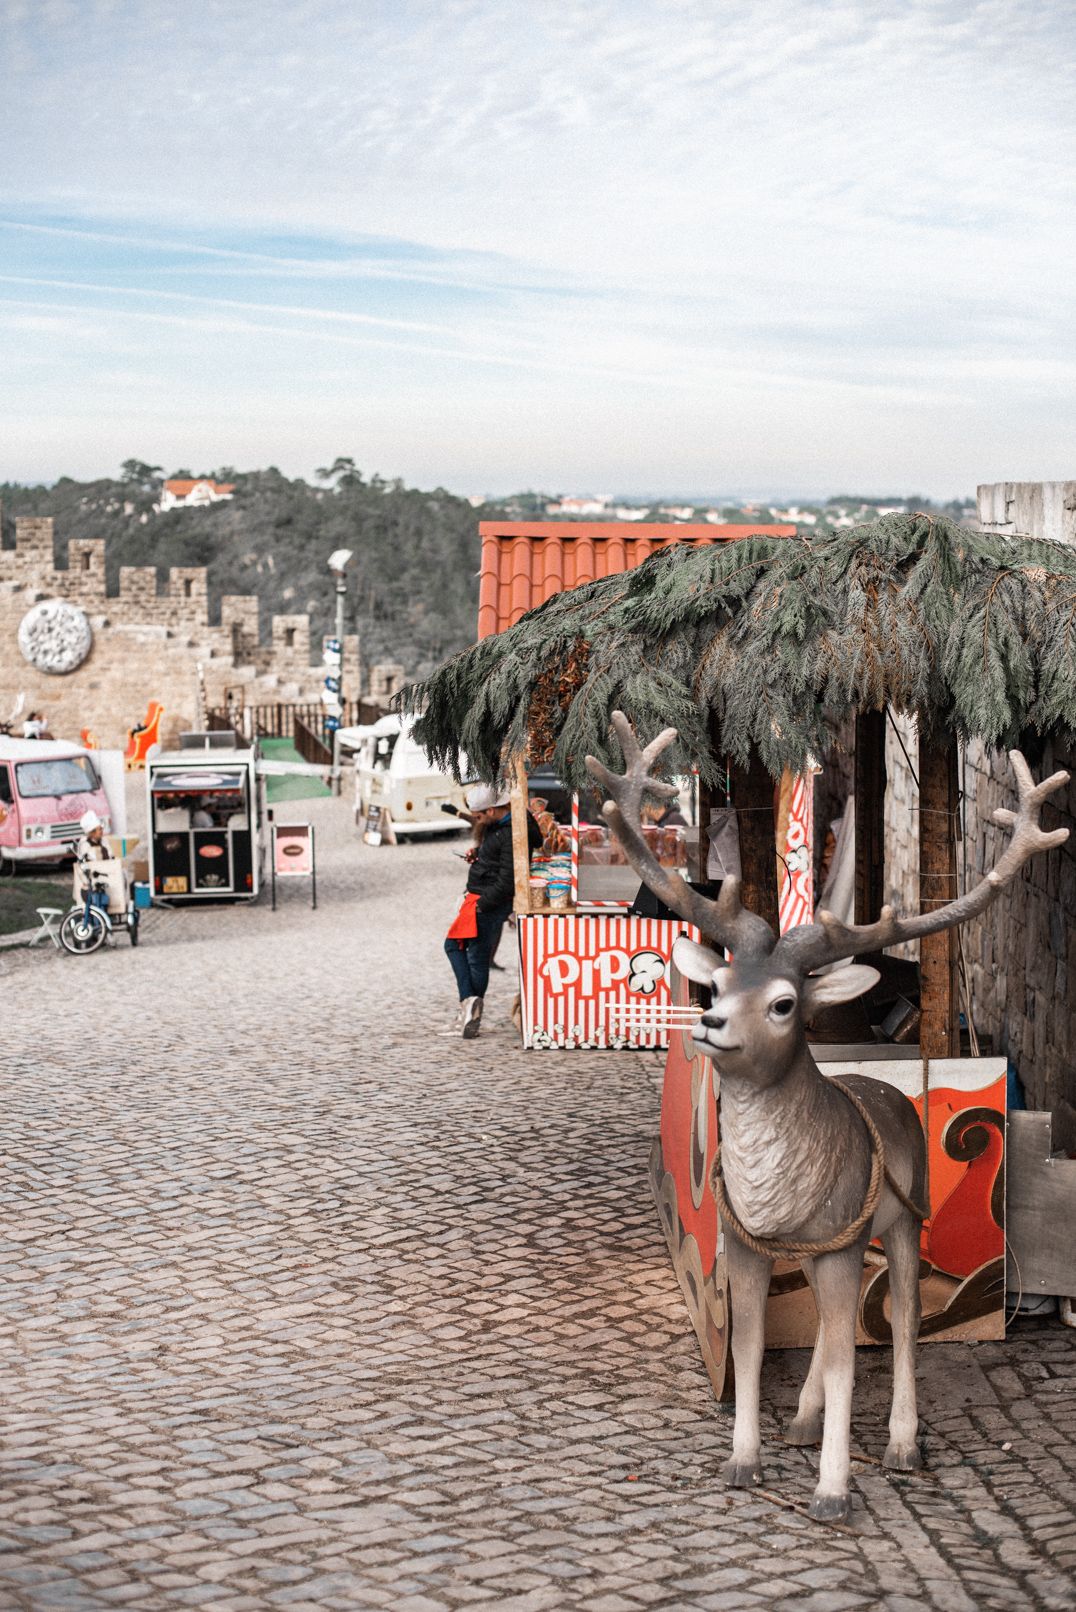 Óbidos Christmas market - Reindeer 